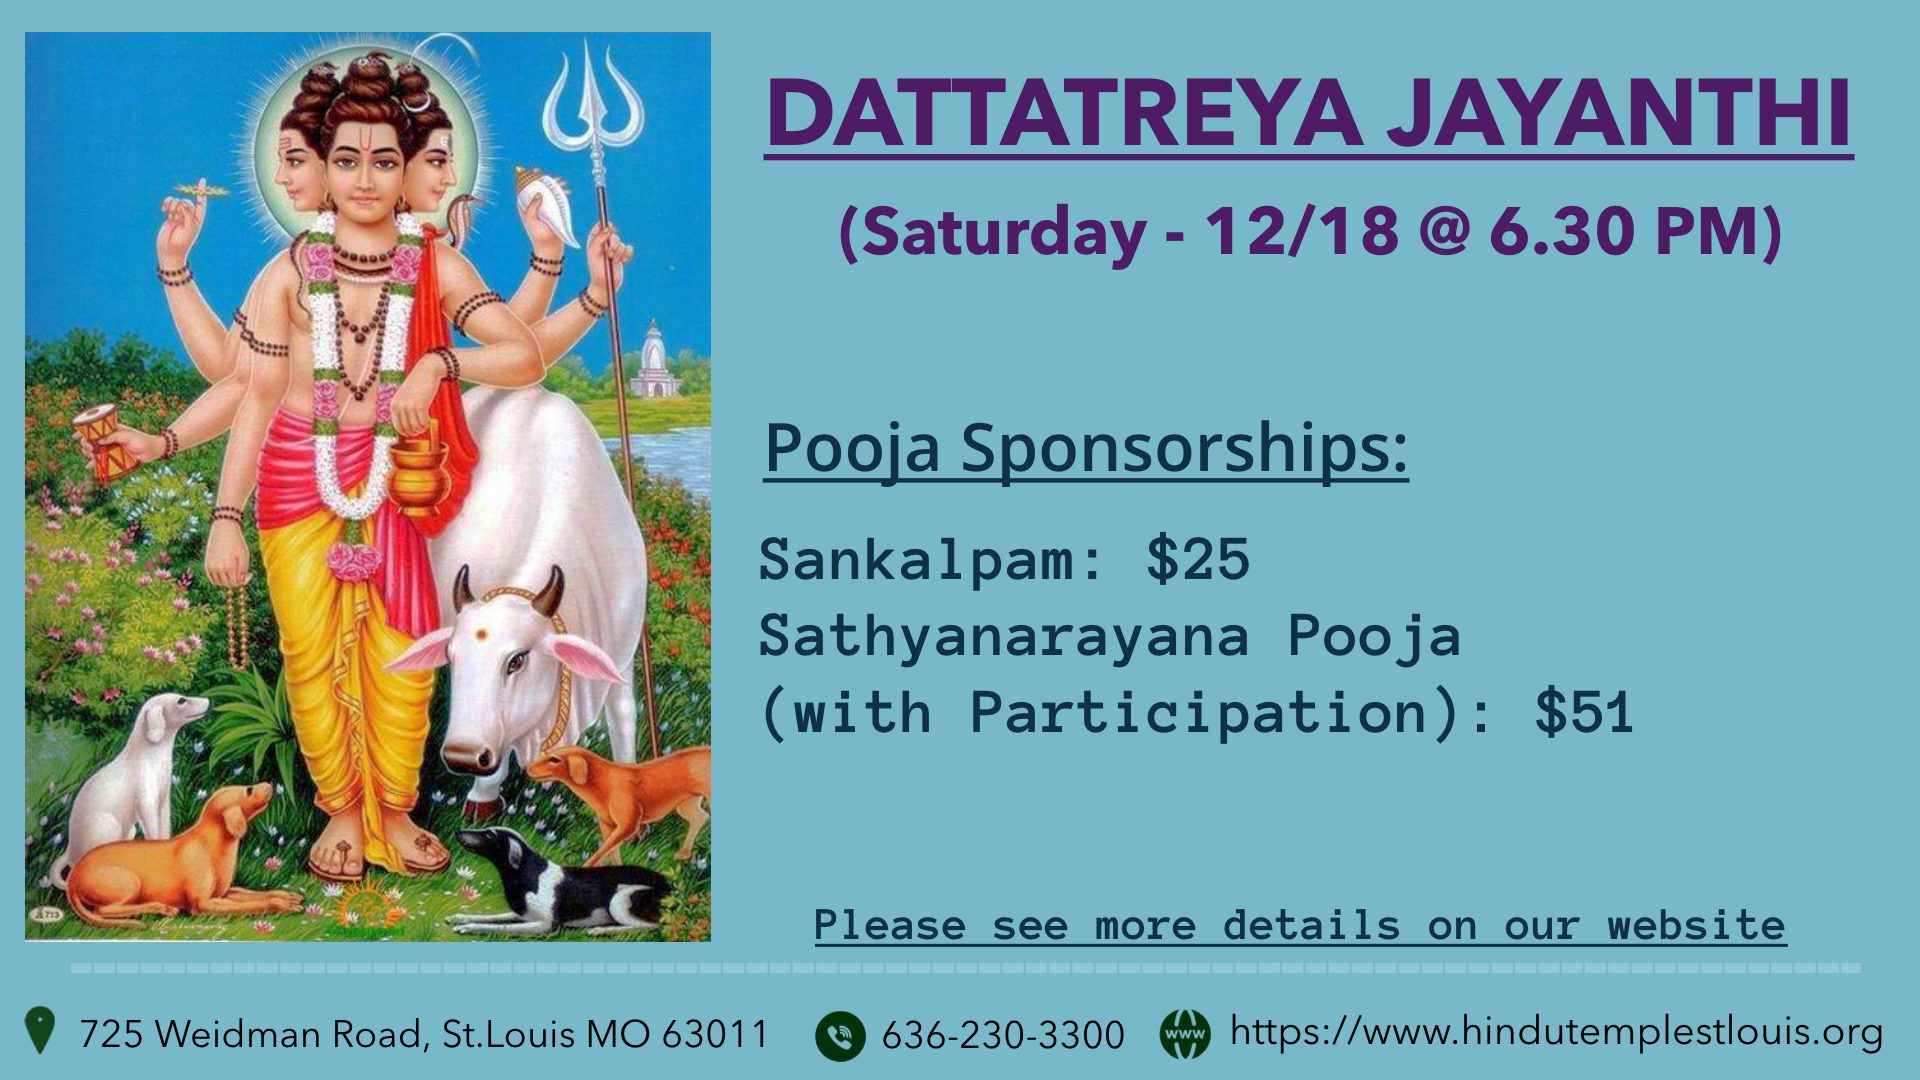 Dattatreya Jayanthi